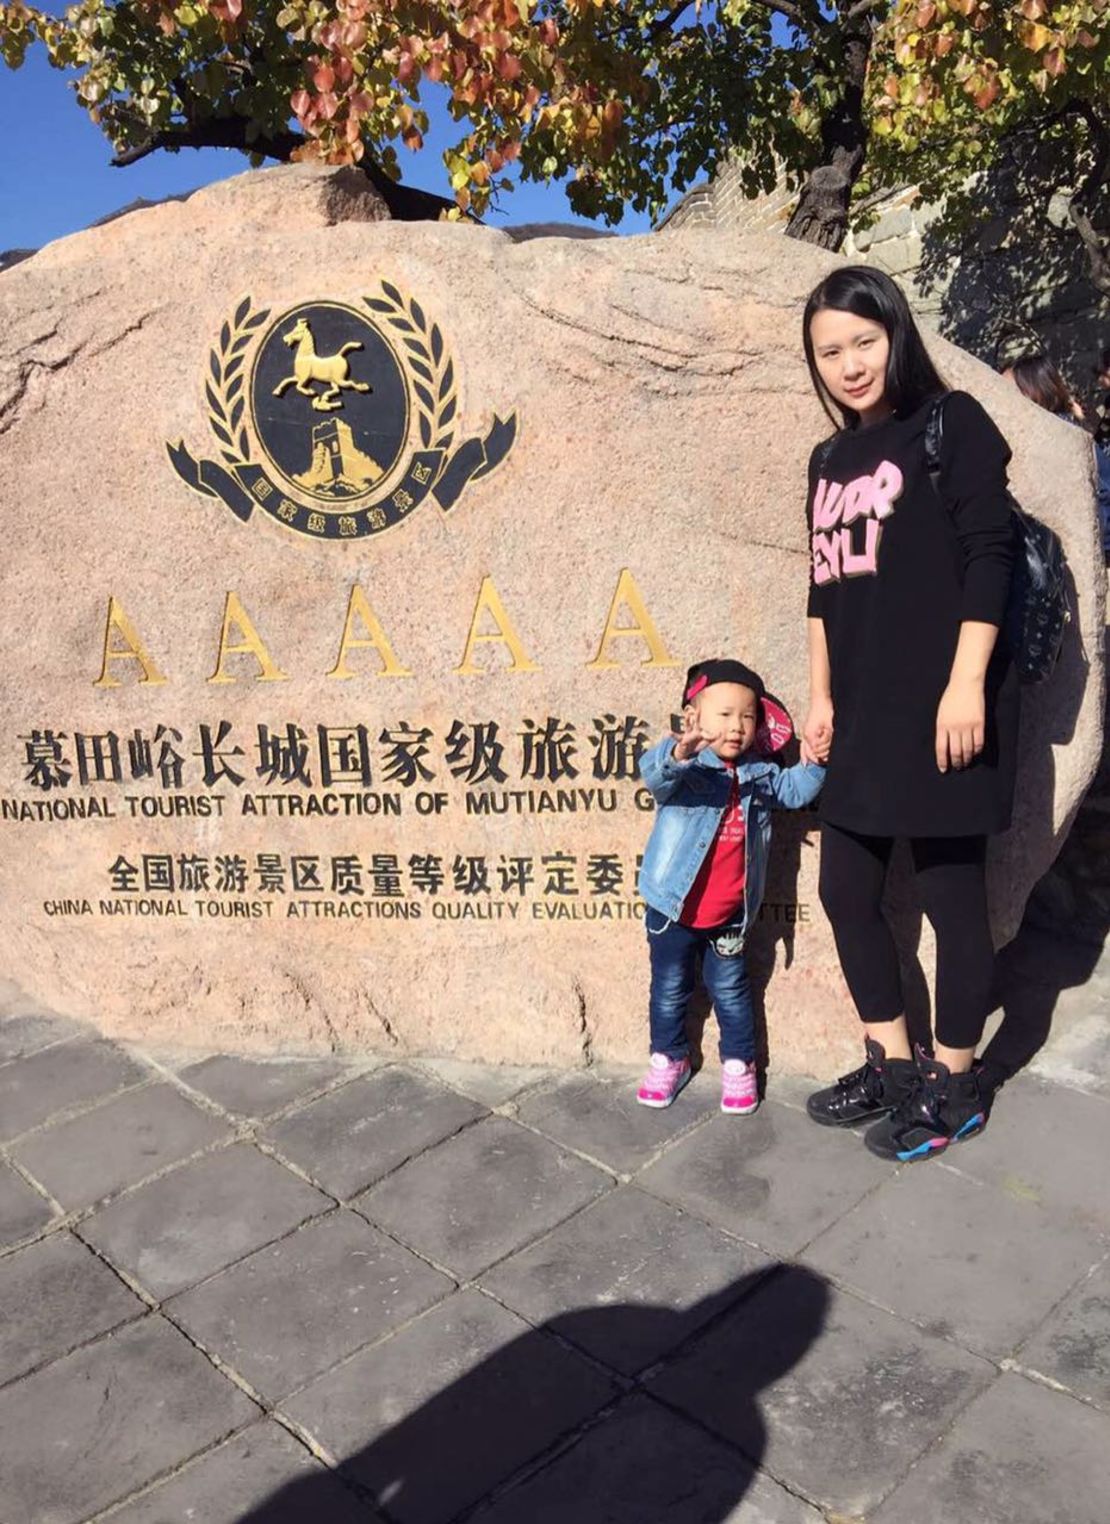 Sun Mingmei and her daughter Mengmeng.